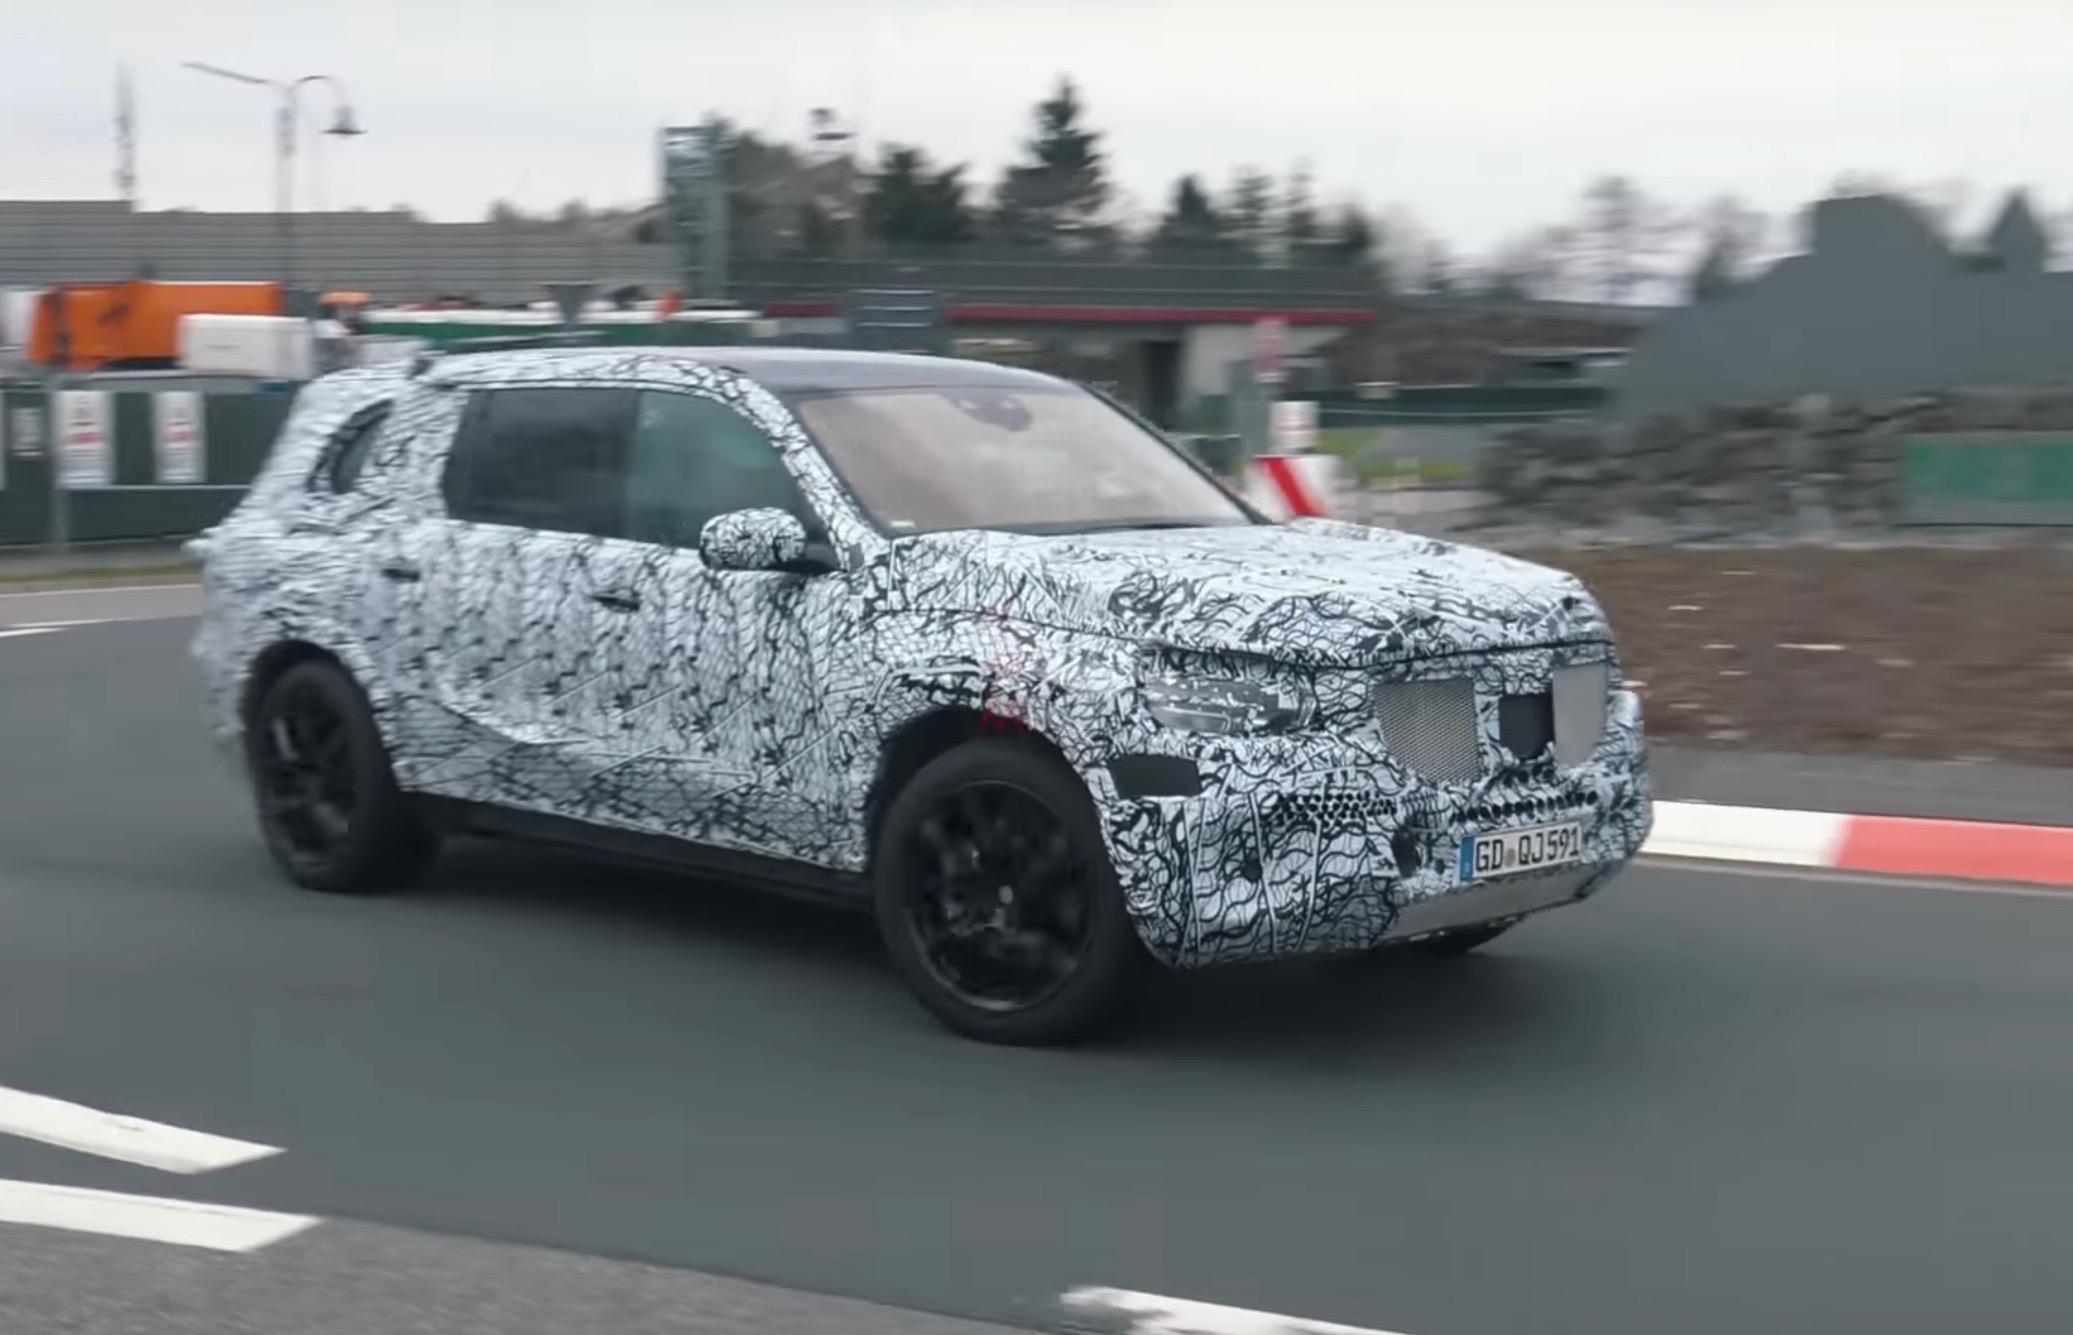 2019 Mercedes-Benz GLS spotted at Nurburgring (video)